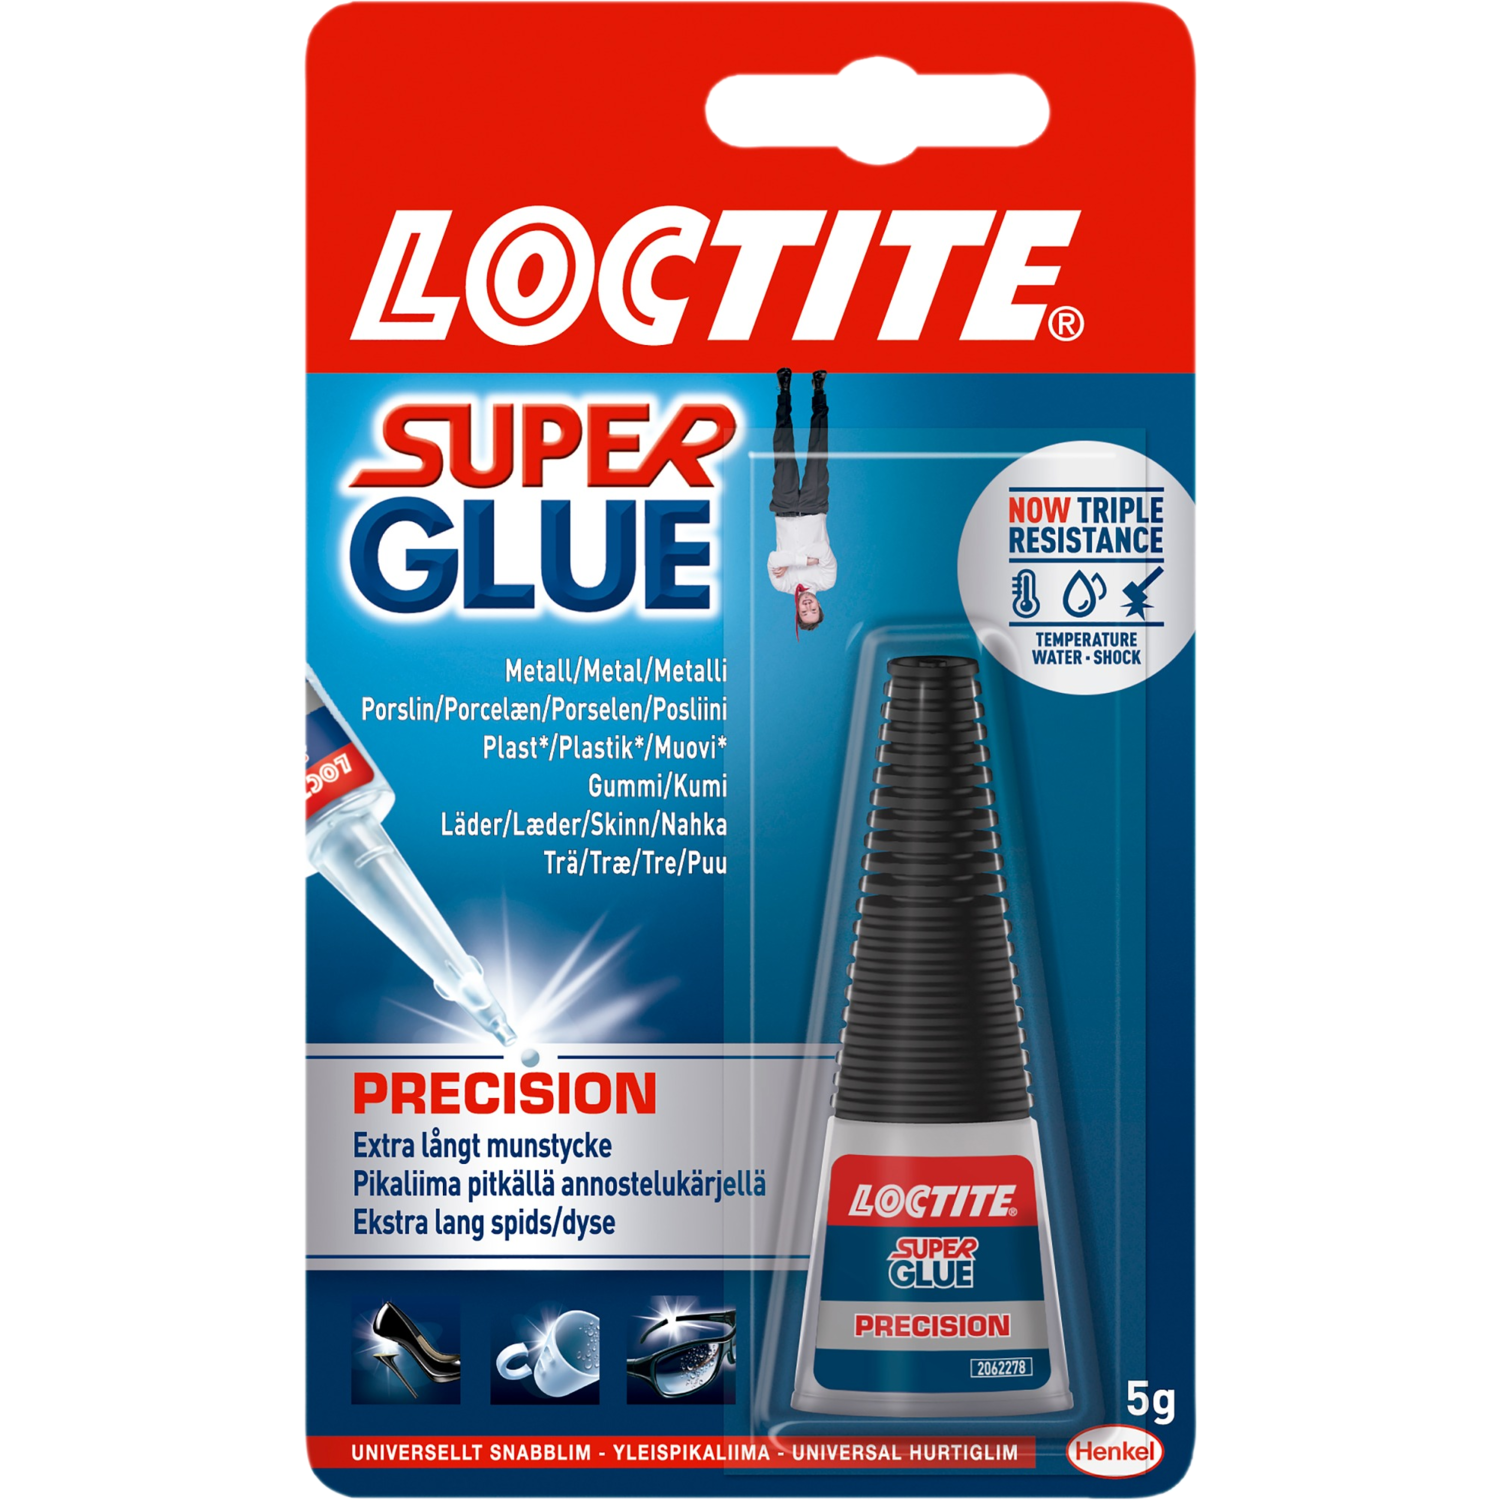 Tog Forbedring legetøj Loctite Super glue liquid precision 5 g